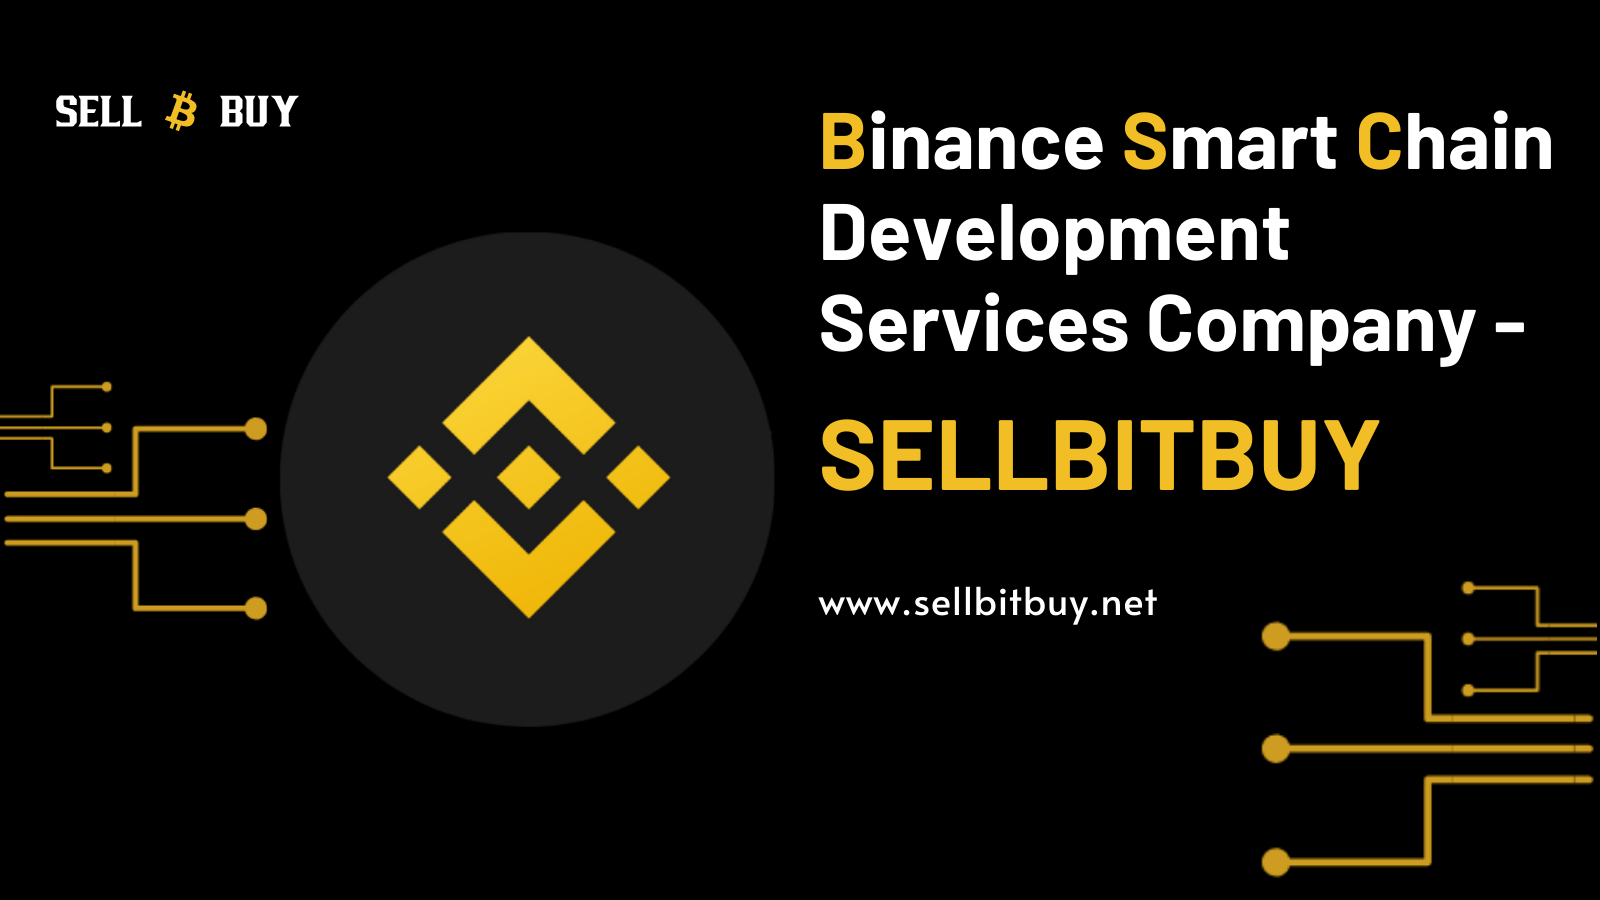 Binance Smart Chain Development Services Company - Sellbitbuy